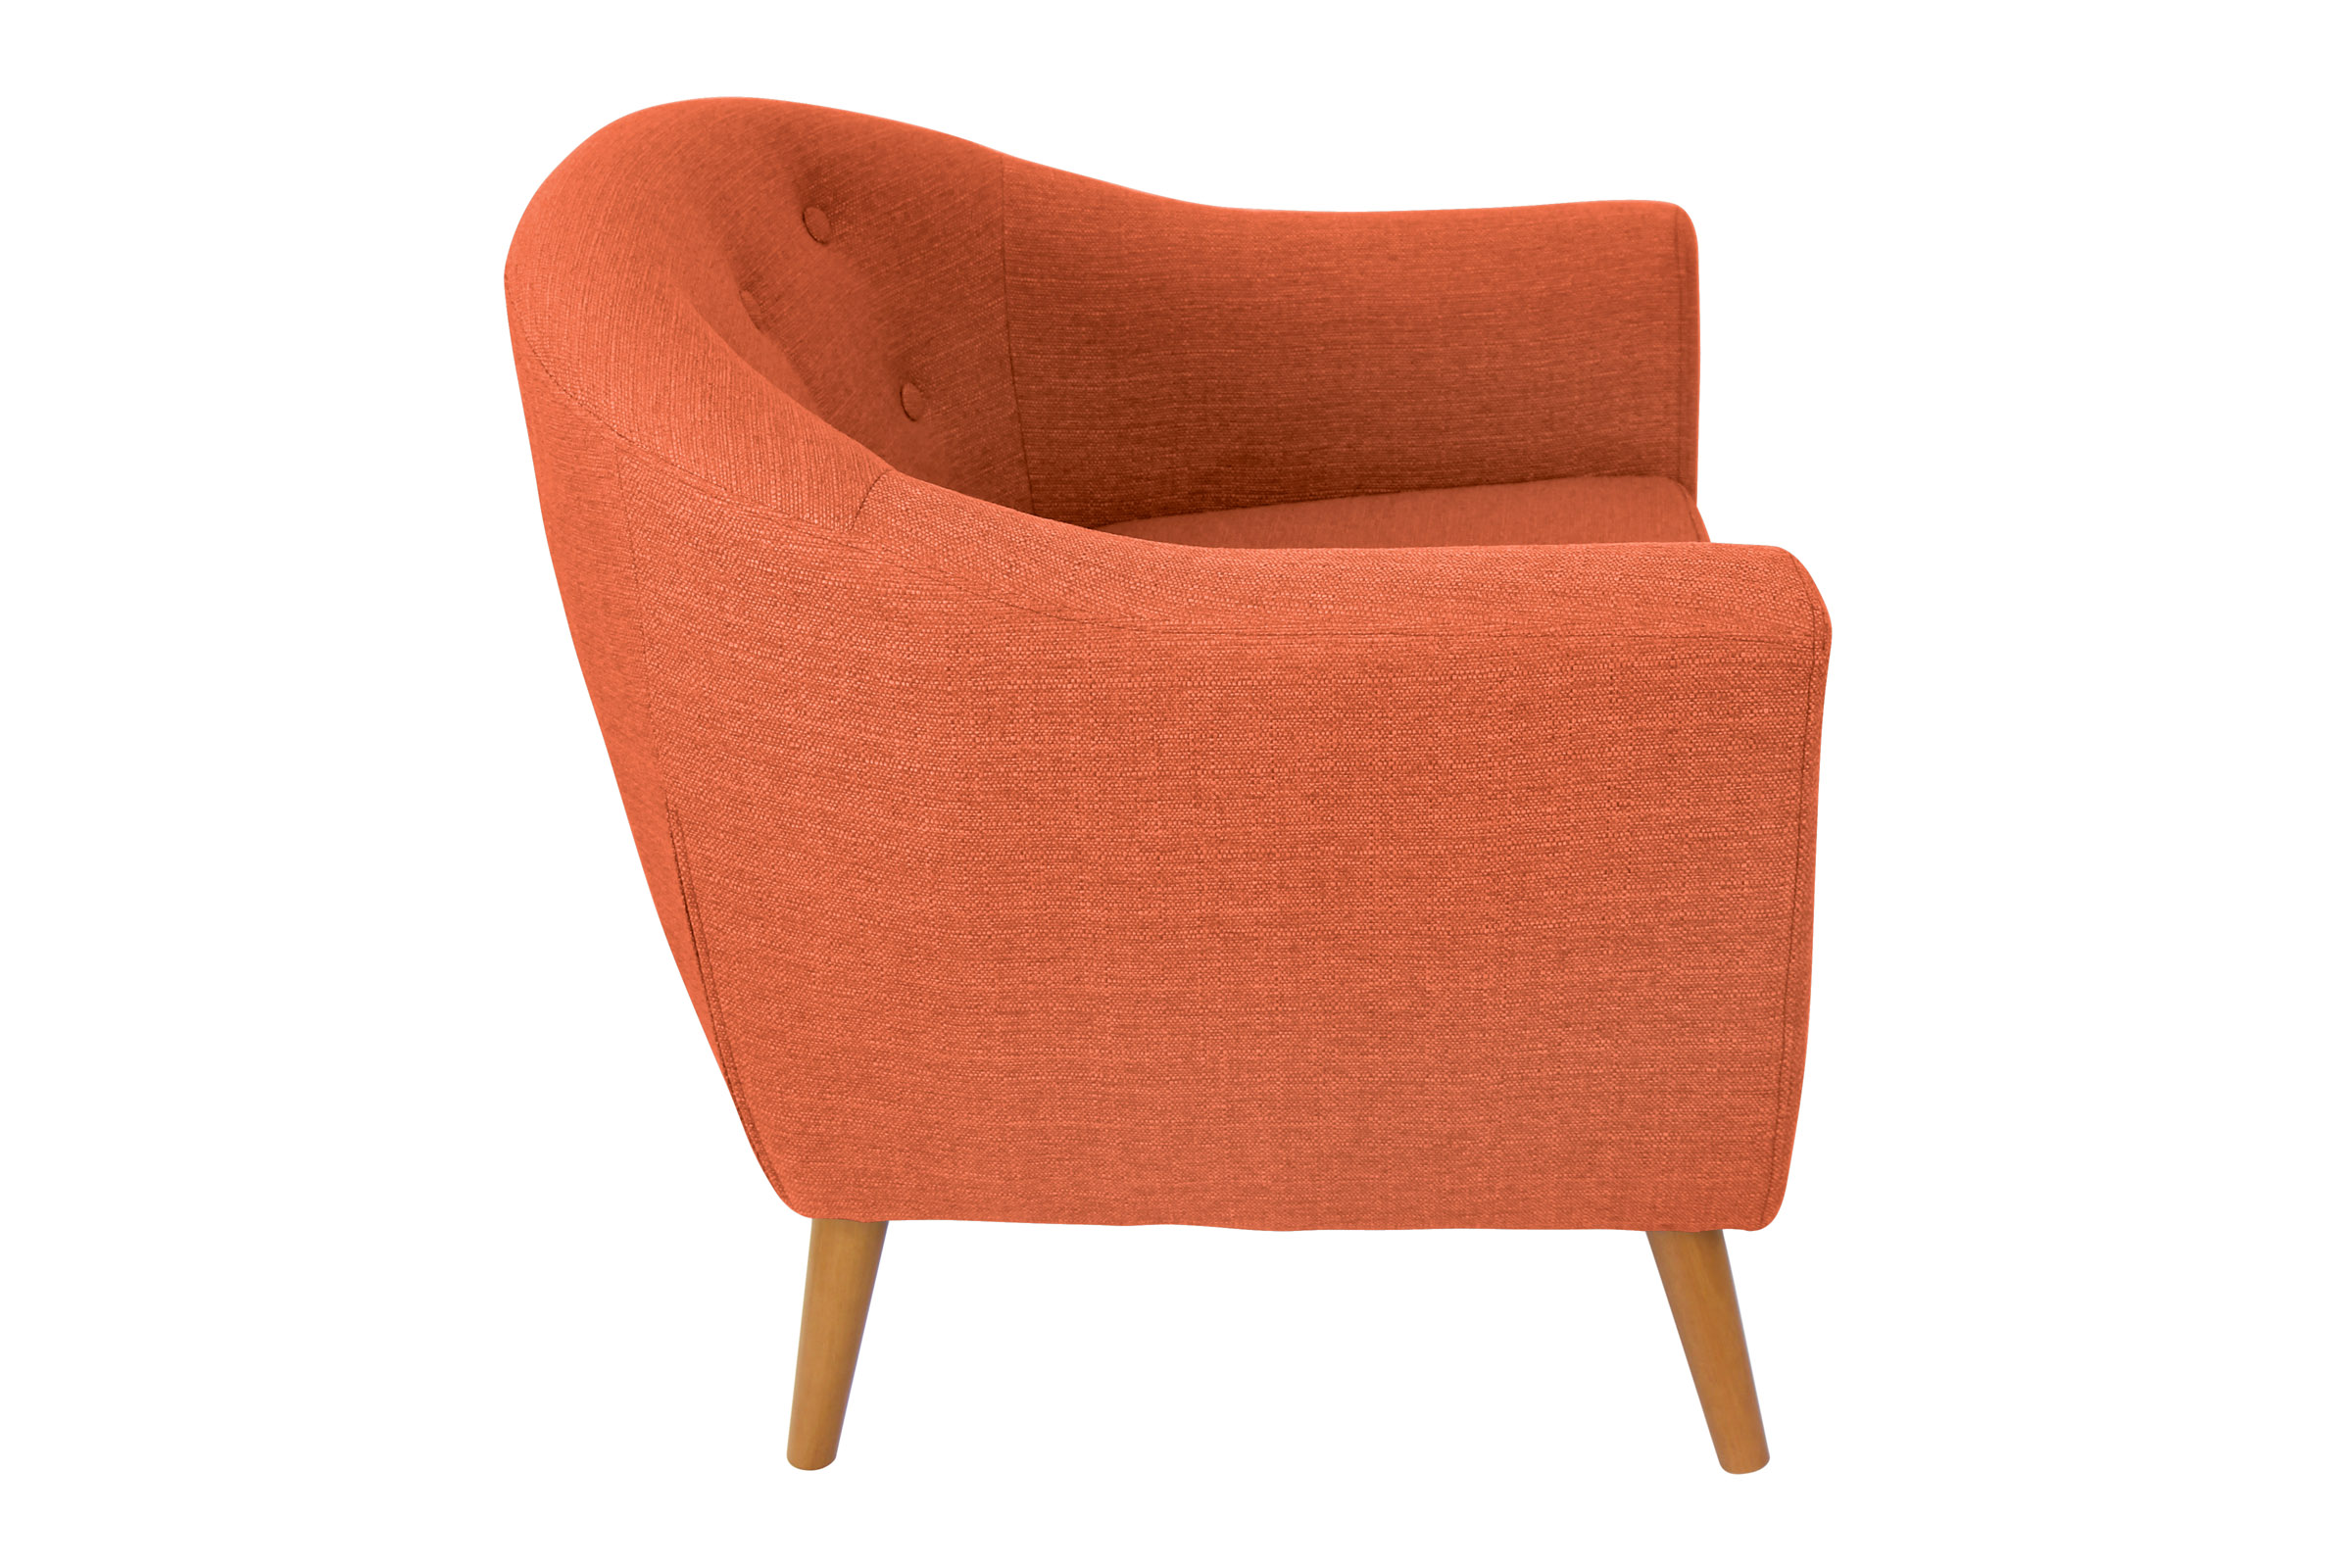 LumiSource Rockwell Orange Chair by LumiSource